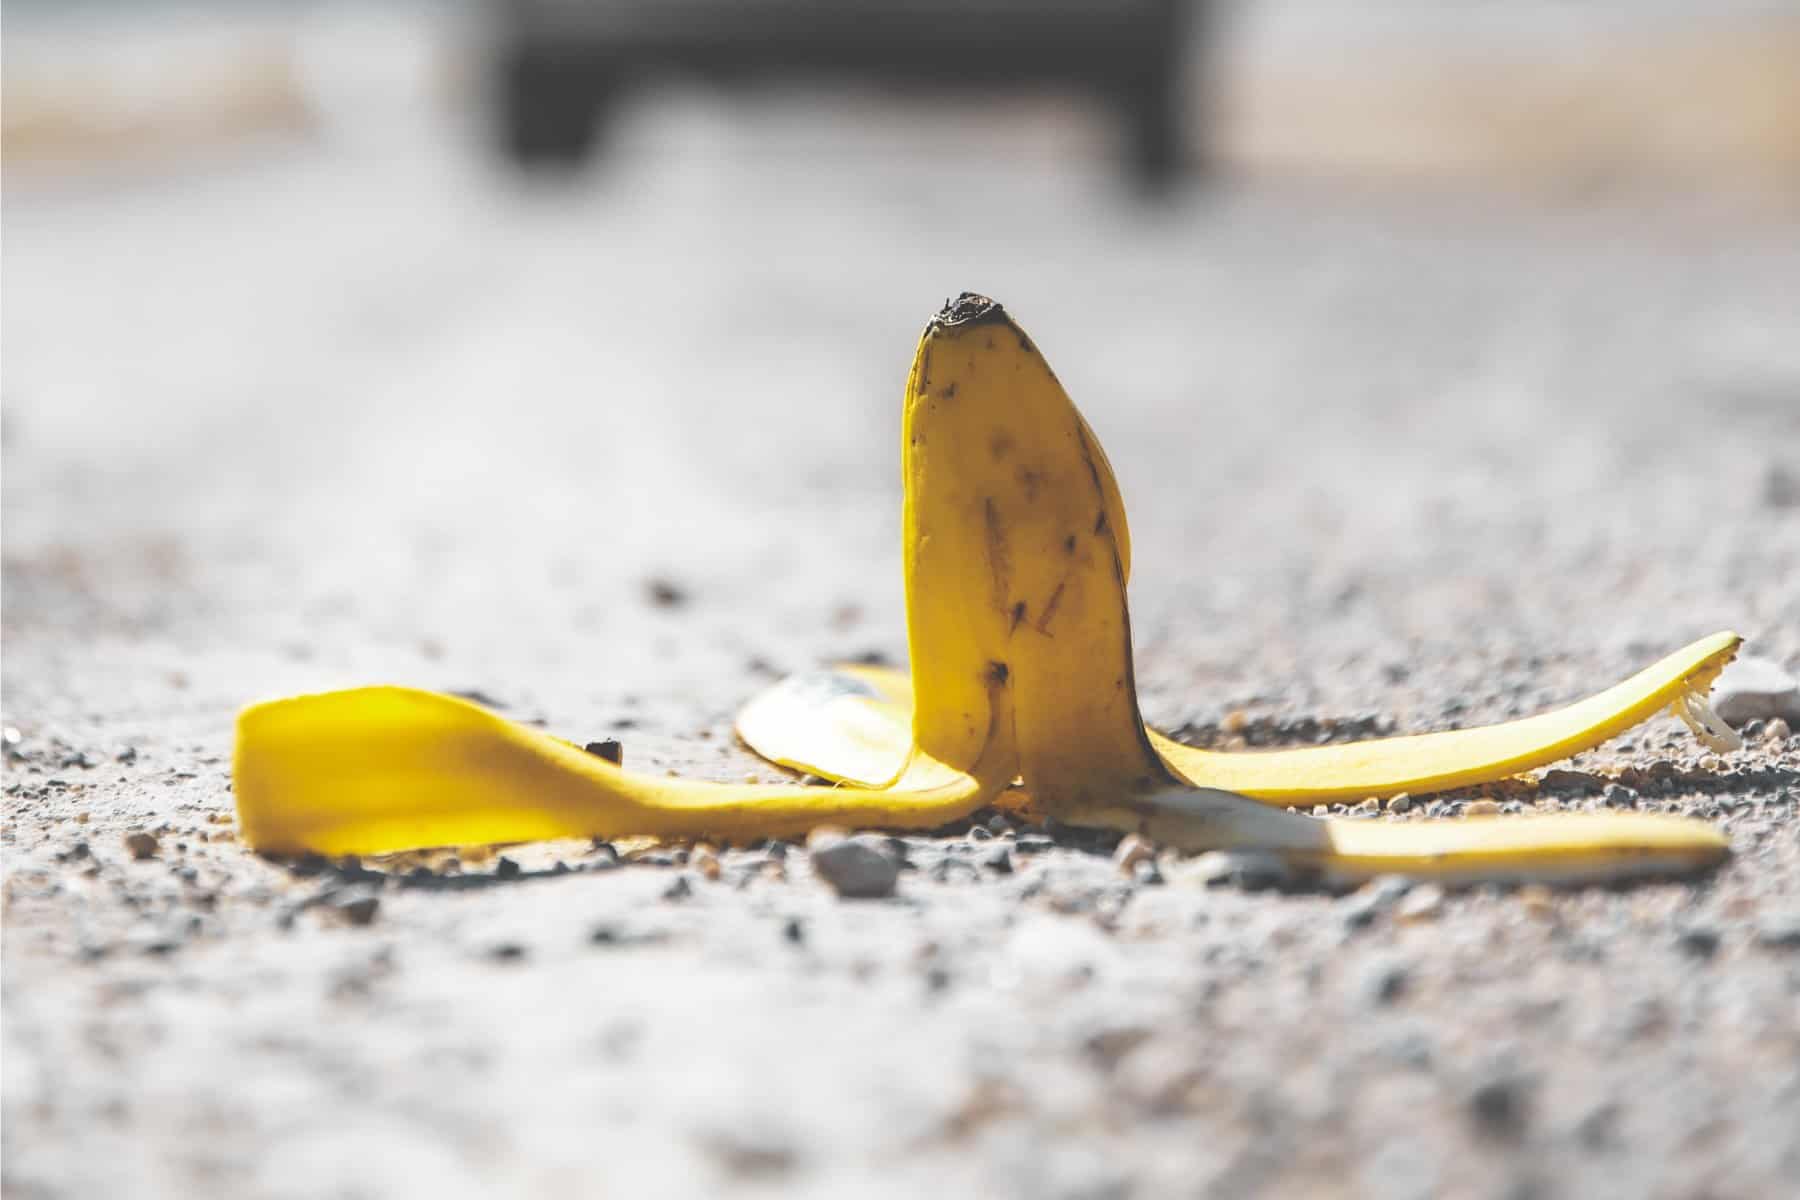 A banana peel on a dirt road.